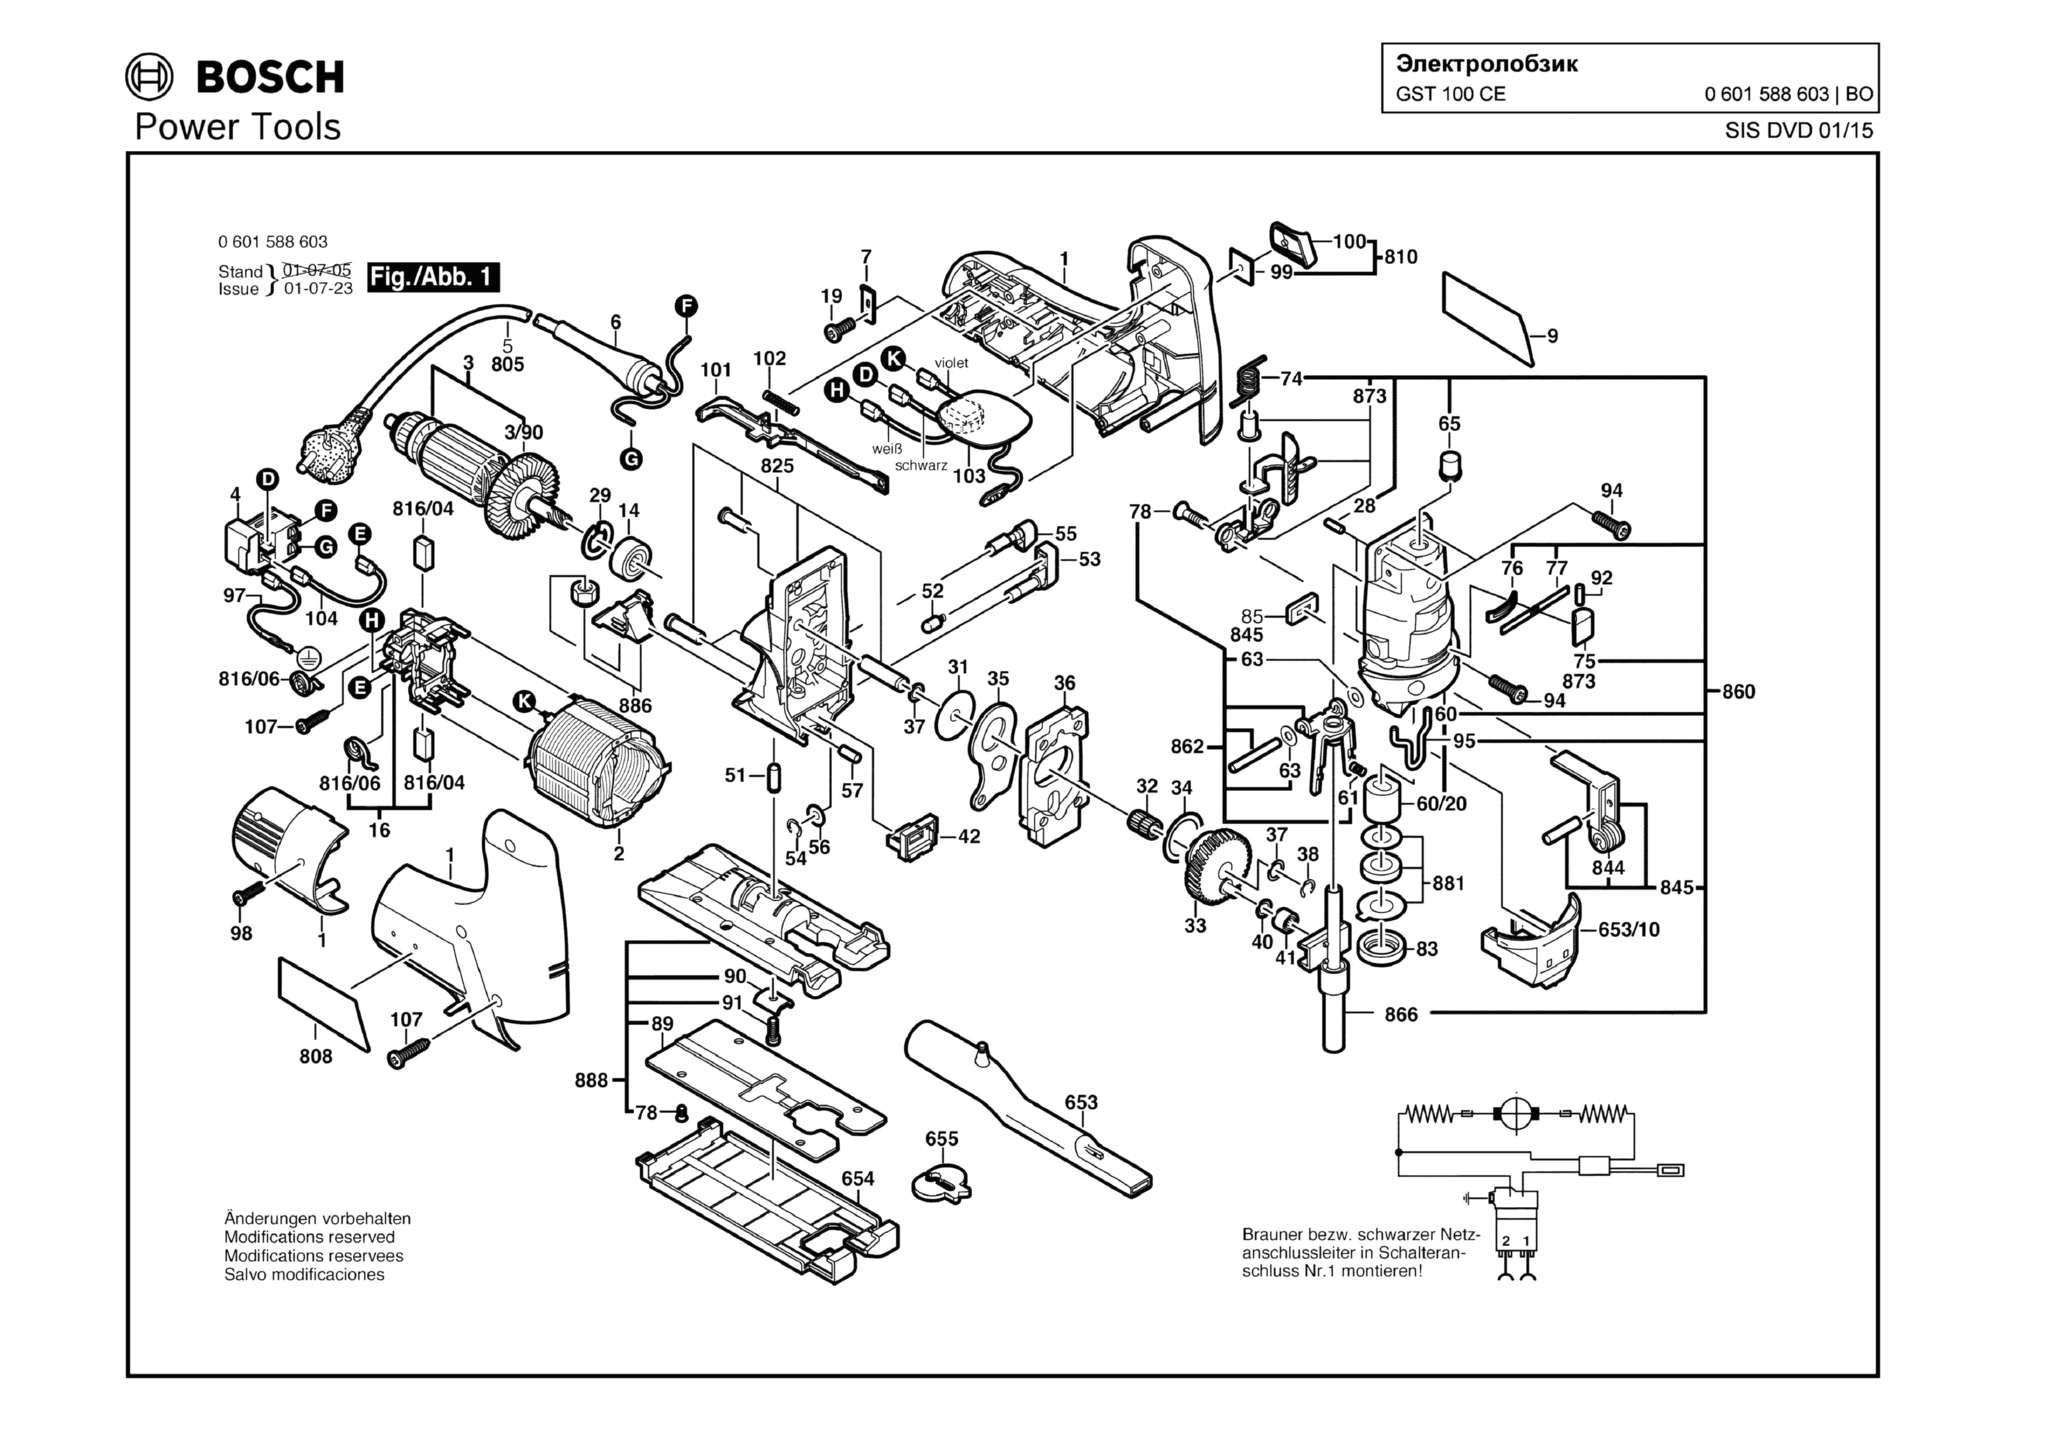 Запчасти, схема и деталировка Bosch GST 100 CE (ТИП 0601588603)